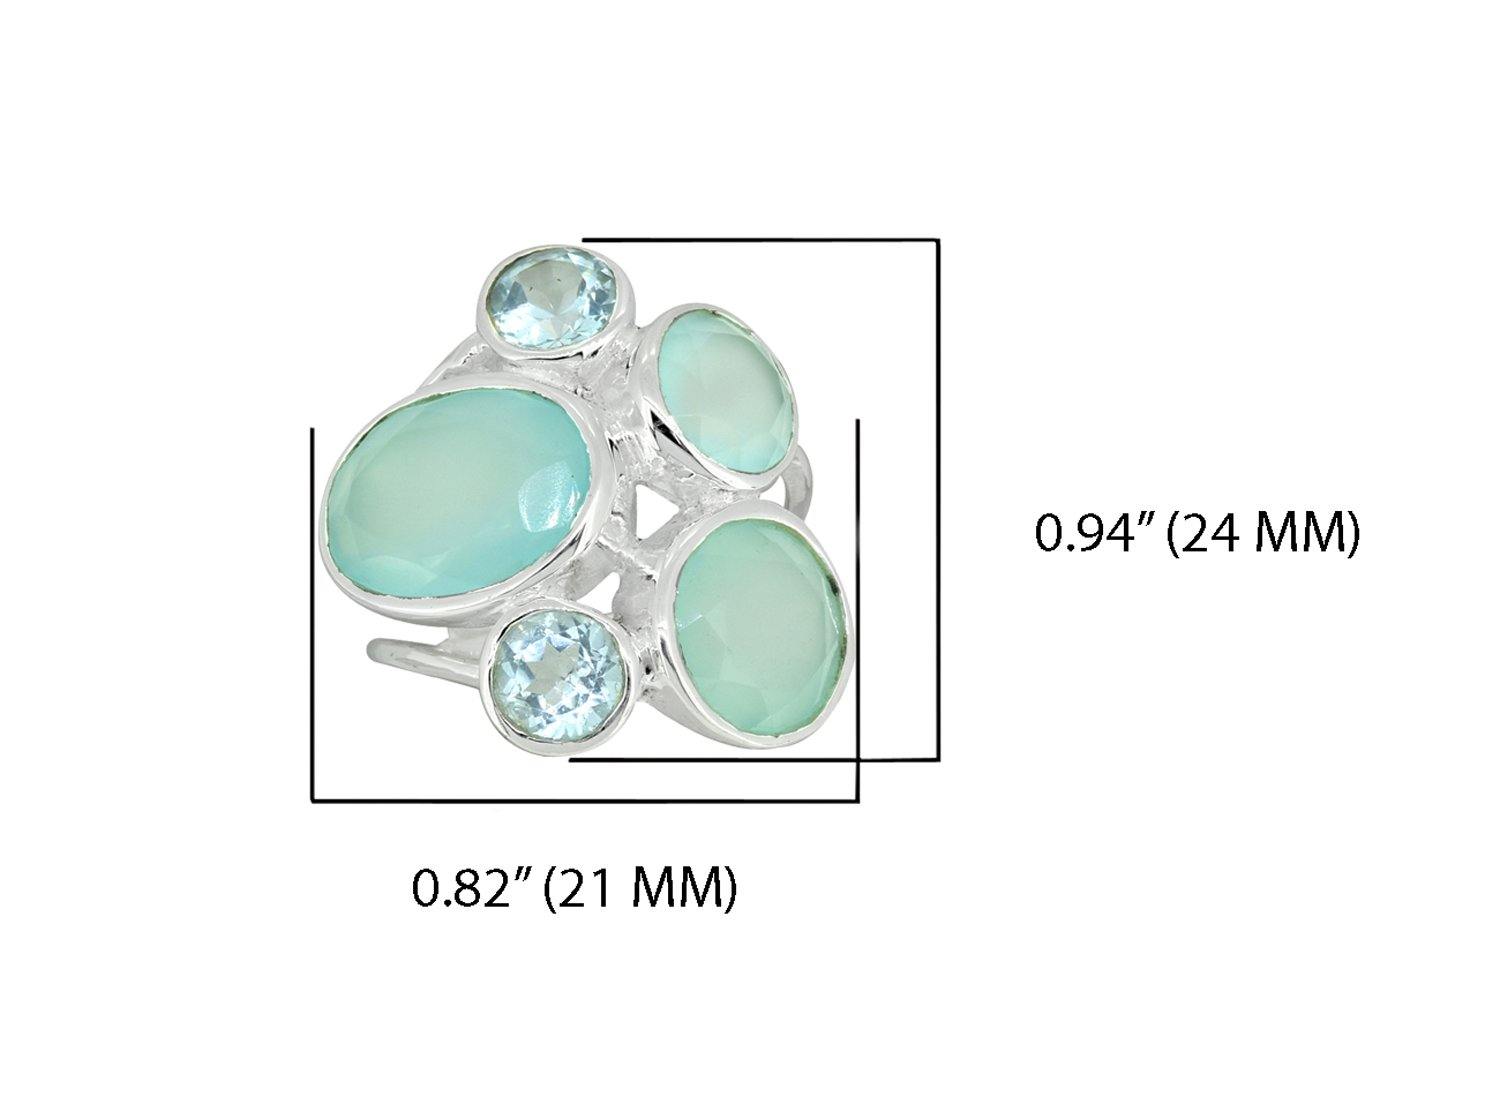 Aqua Chalcedony Blue Topaz Ring Solid 925 Sterling Silver Gemstone Jewelry - YoTreasure